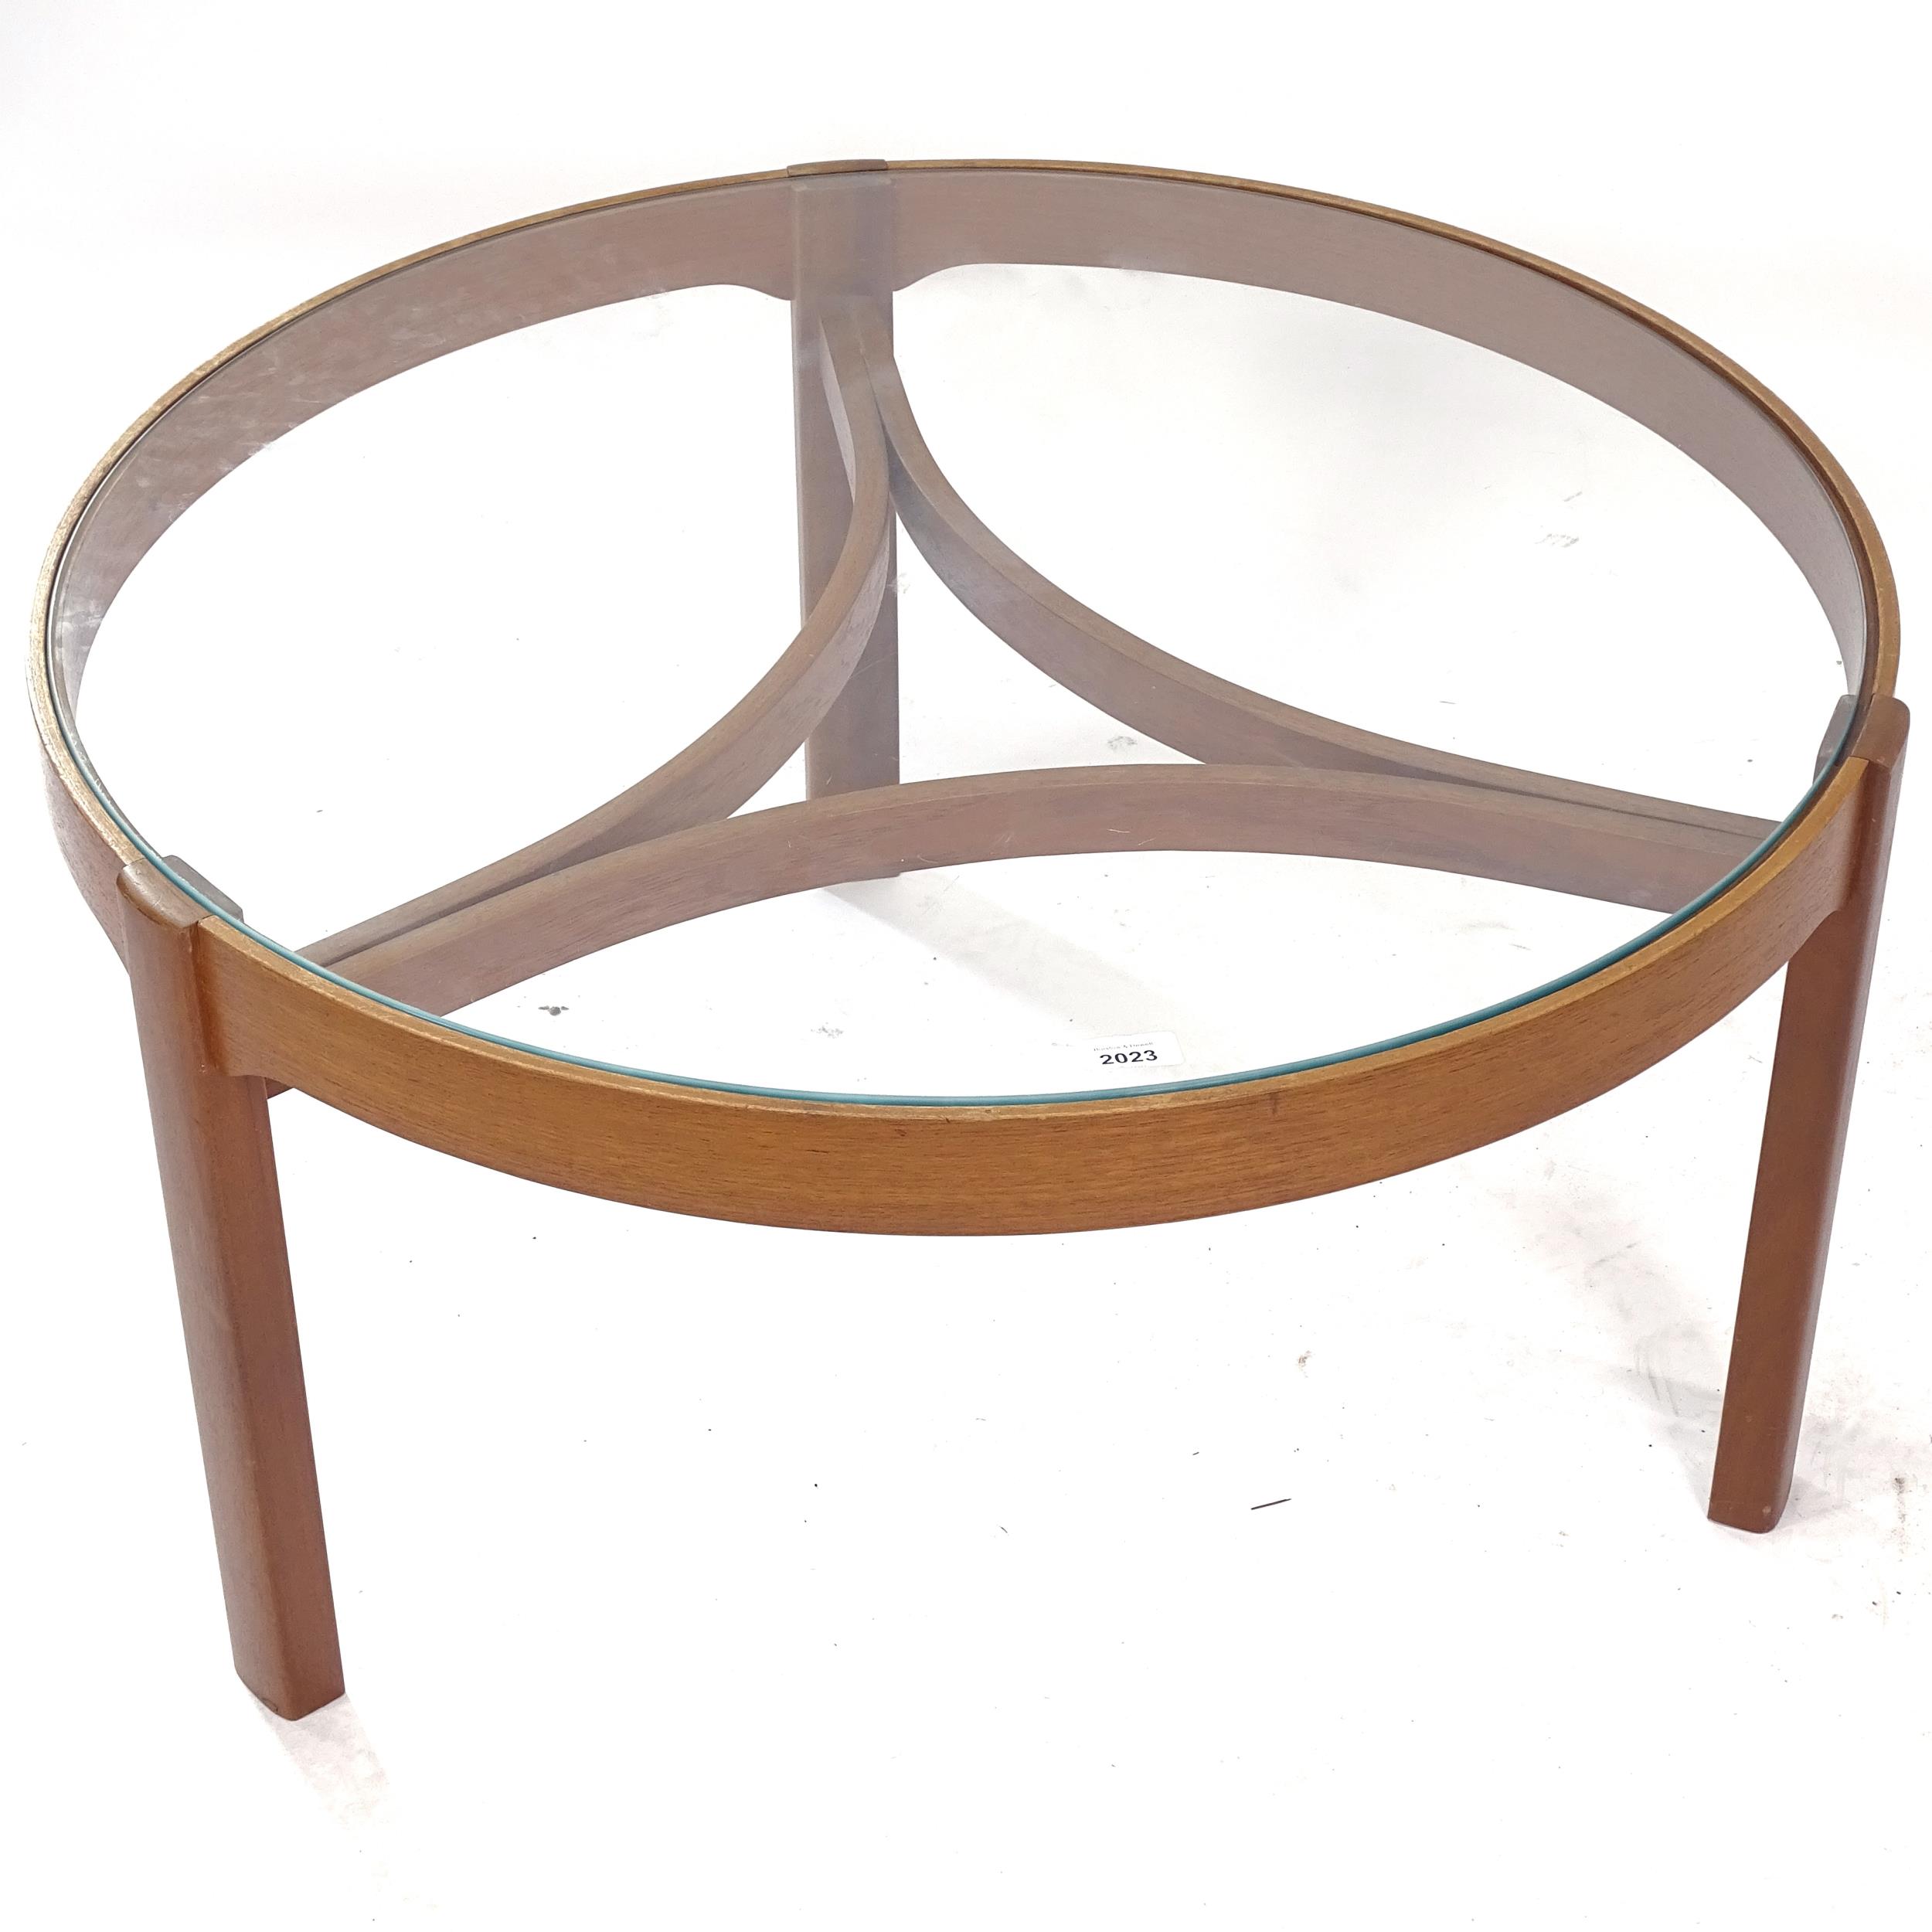 A mid-century circular glass-top teak coffee table, W82cm